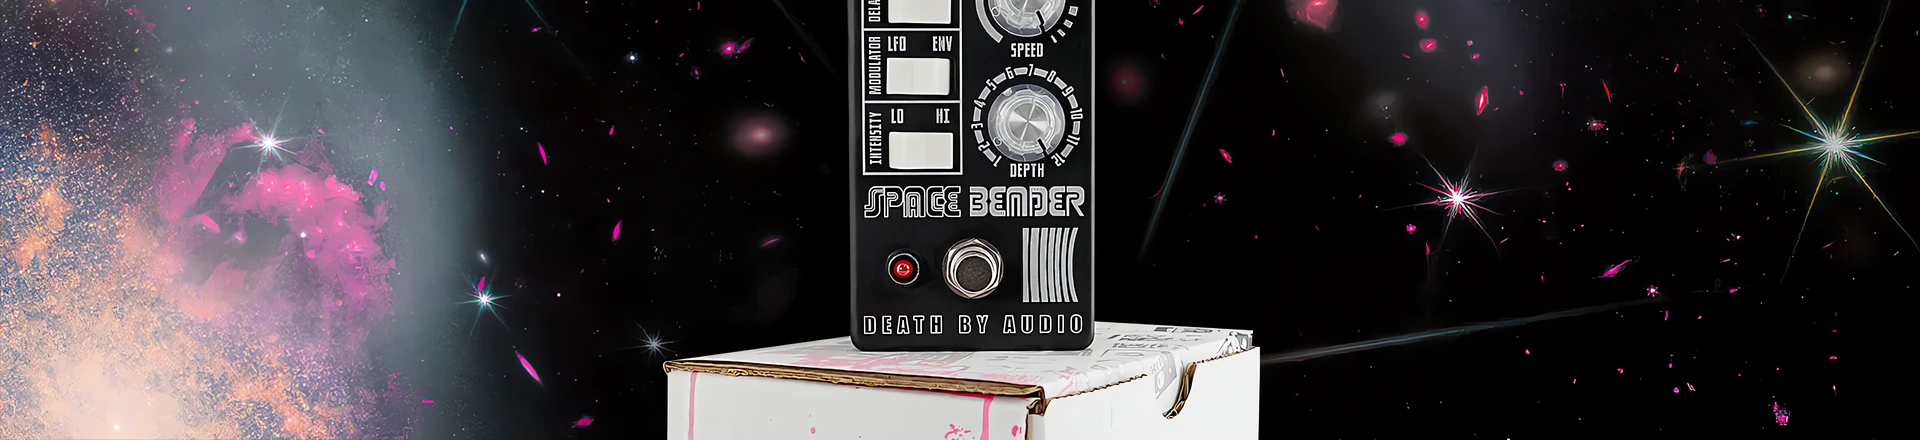 Space Bender od Death By Audio, czyli chorus +++